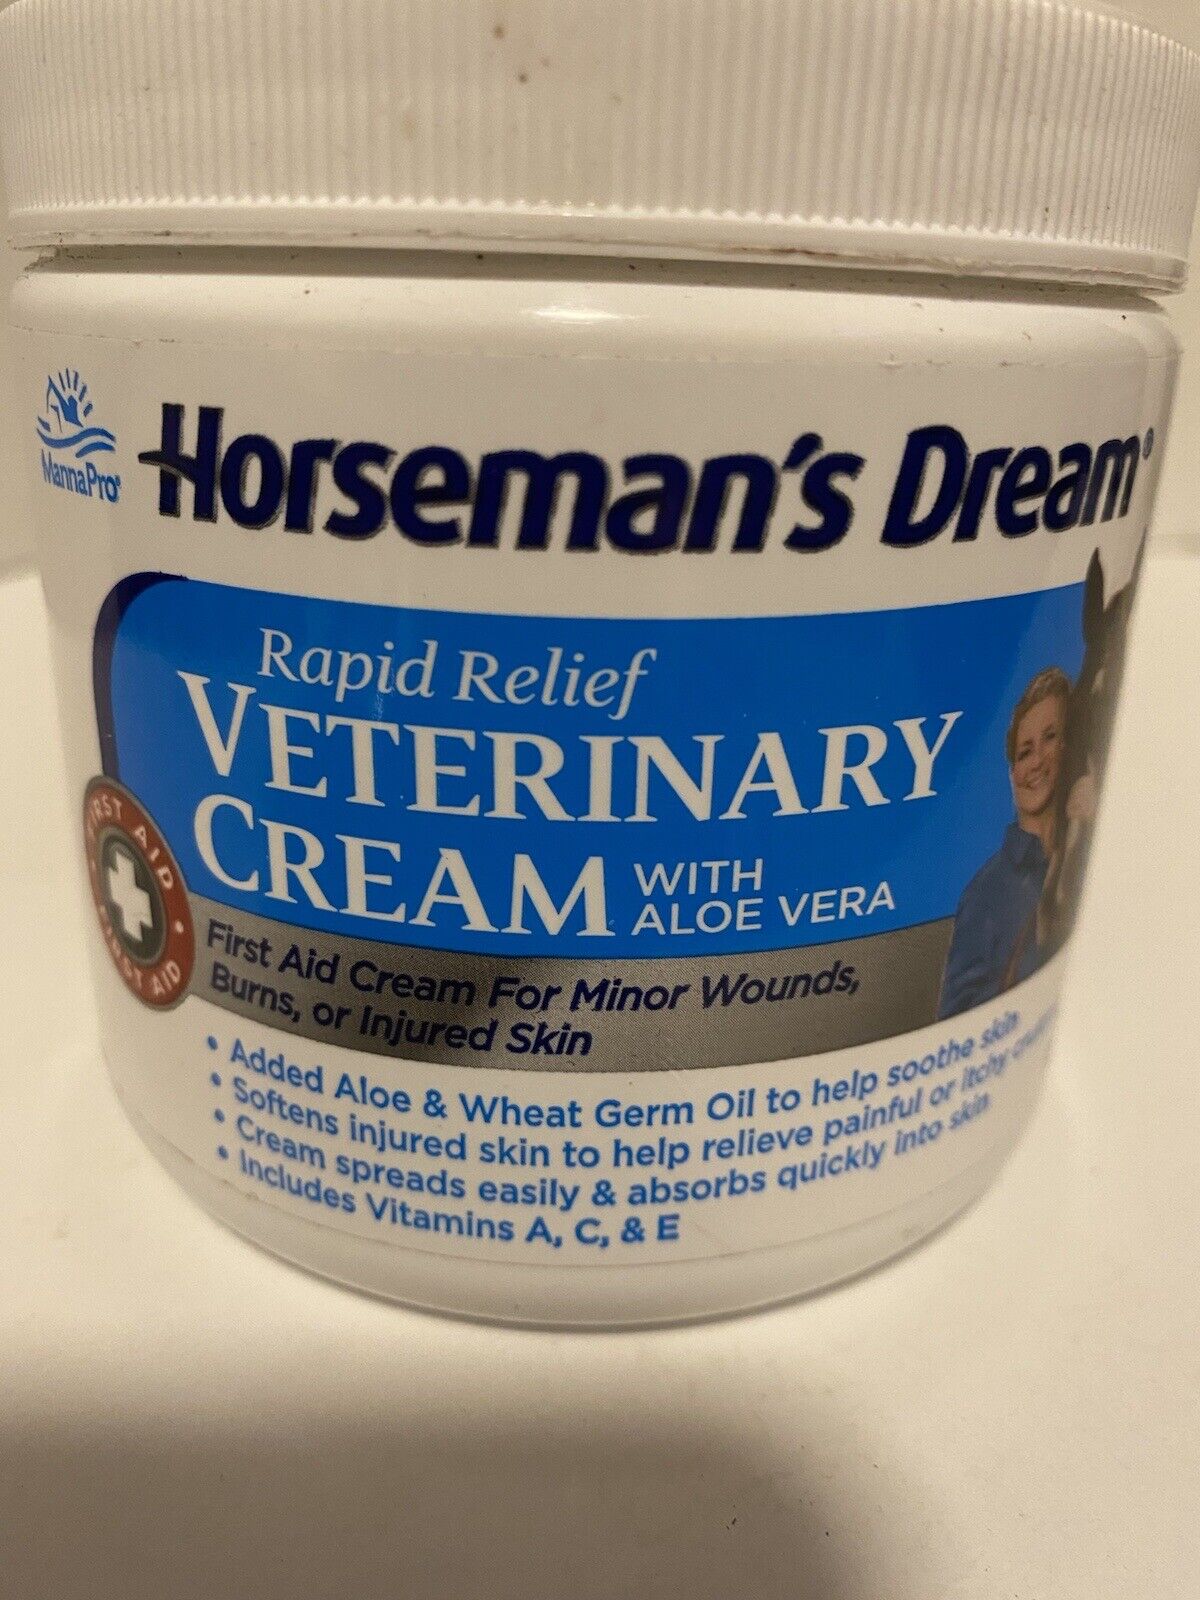 HORSEMAN'S DREAM Vet Cream two 16 oz containers Horseman's Dream 97005299